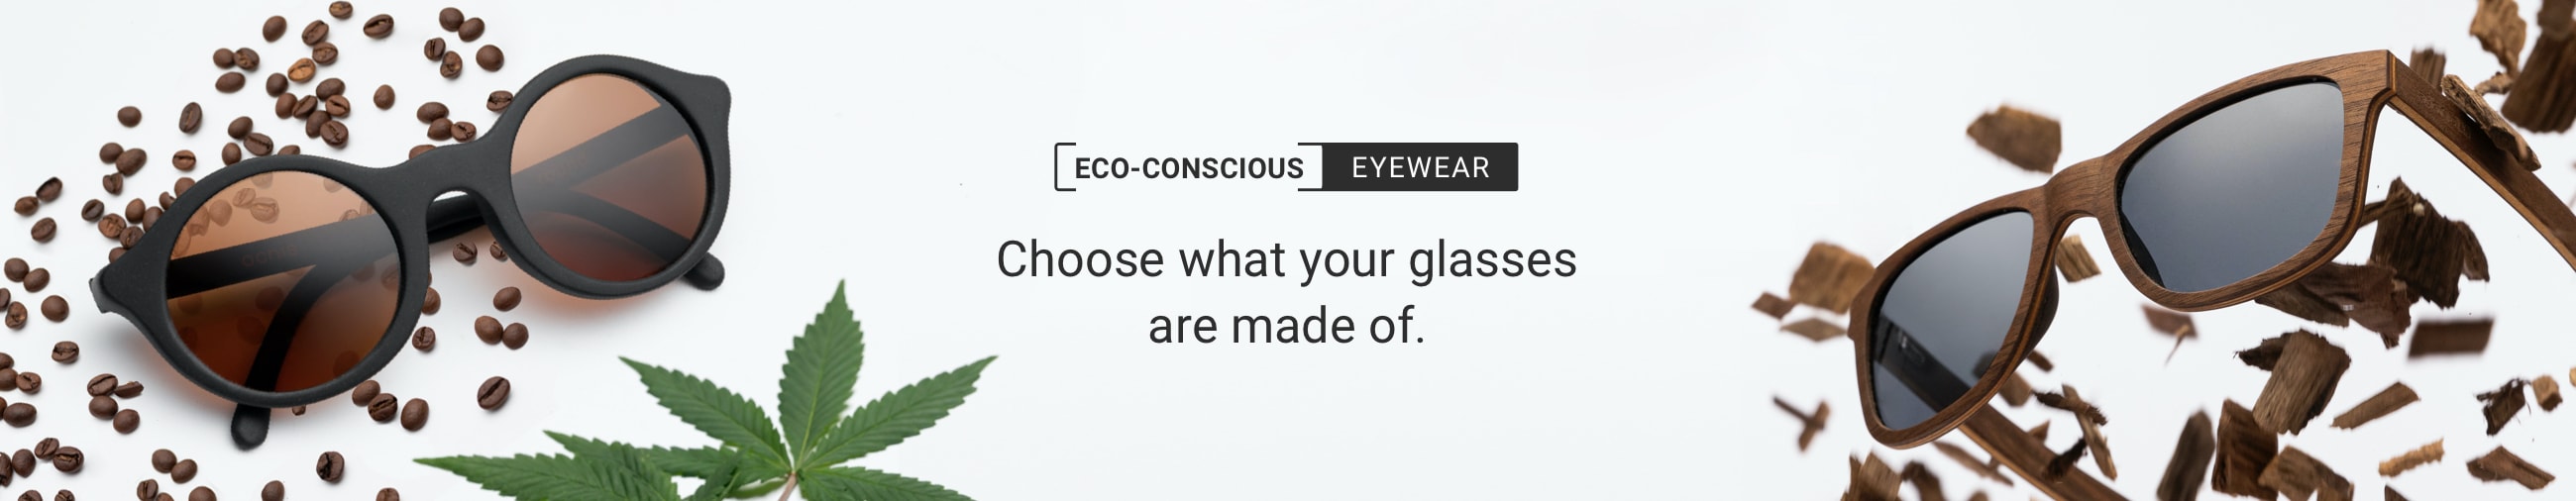 Eco-conscious eyewear